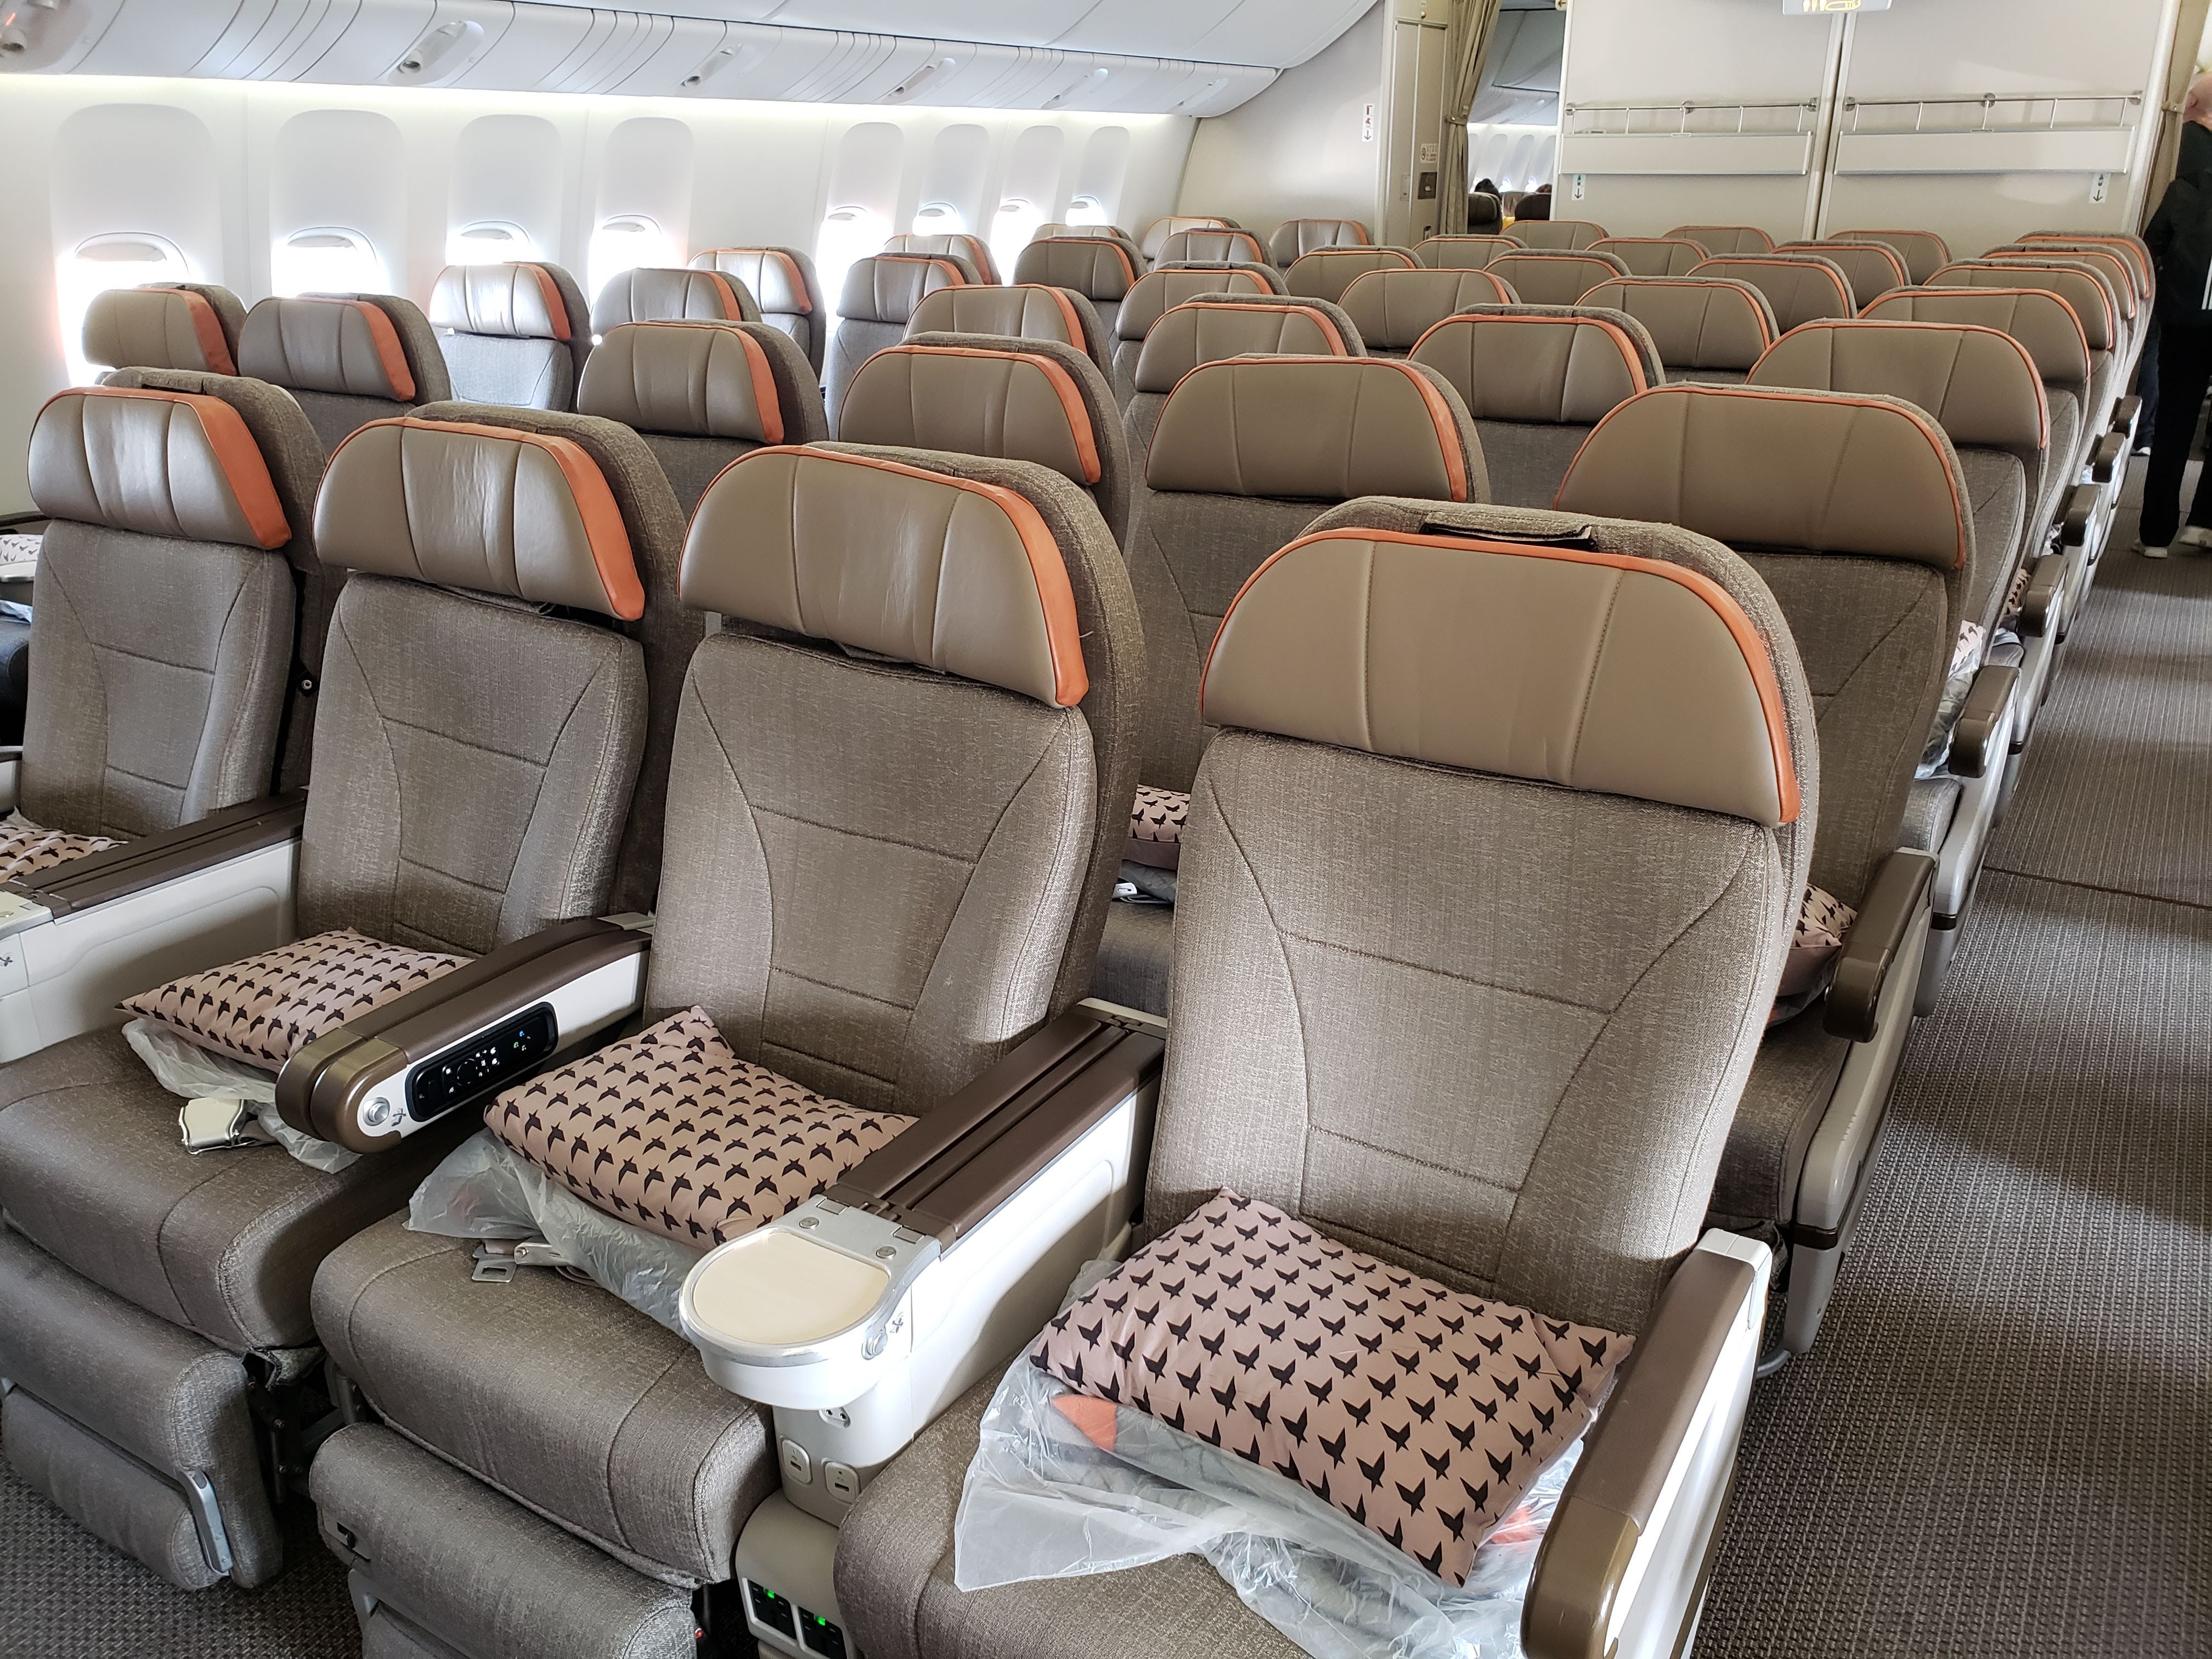 Inside a newer EVA Air premium economy cabin.